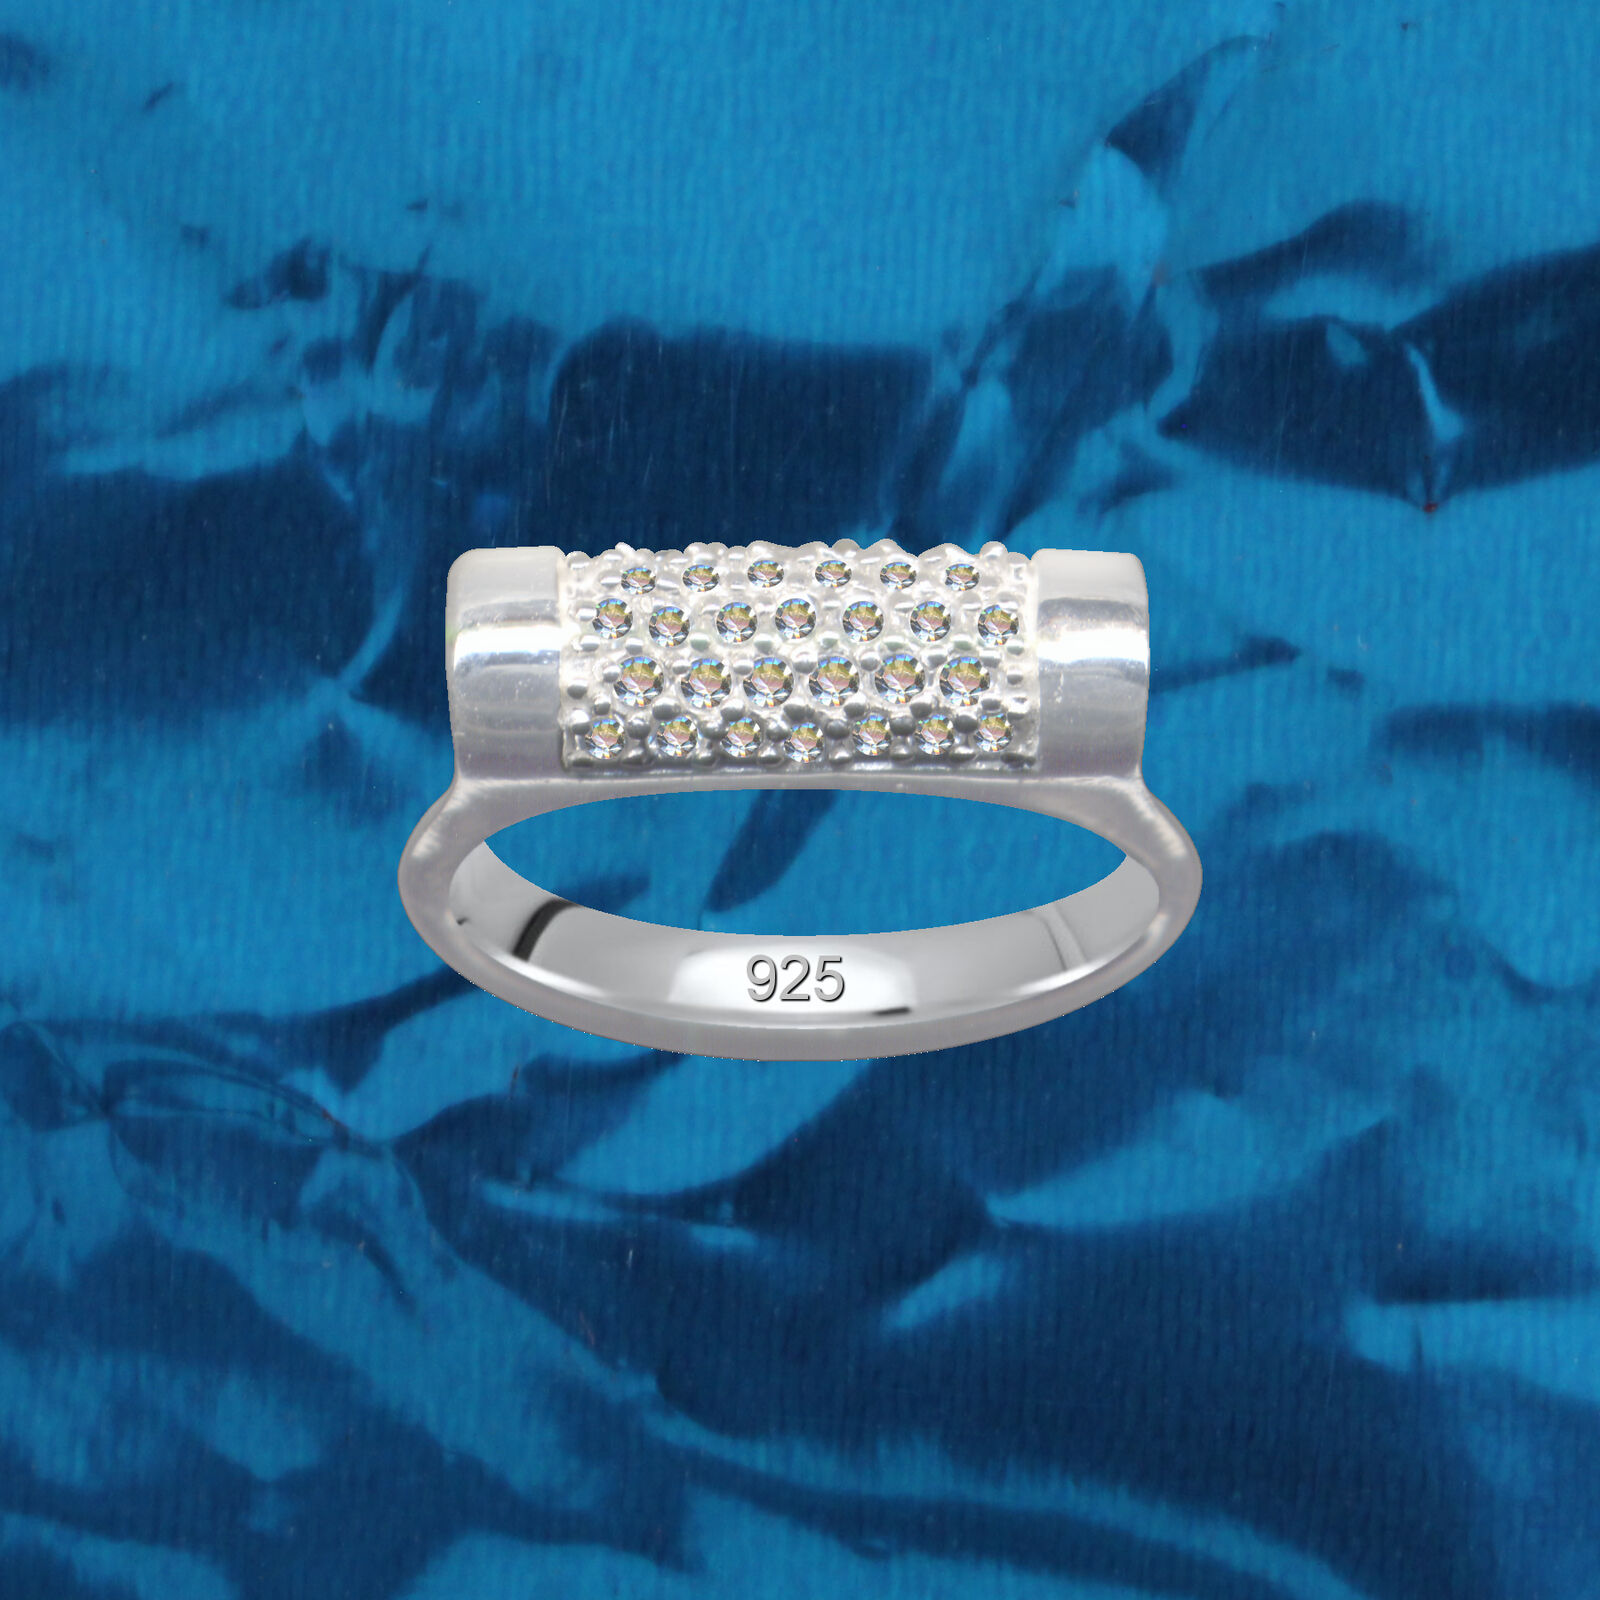 NEU Exklusiver Art Deco Ring Echt 925 Sterling Silber Zirkonia Strass Kristalle